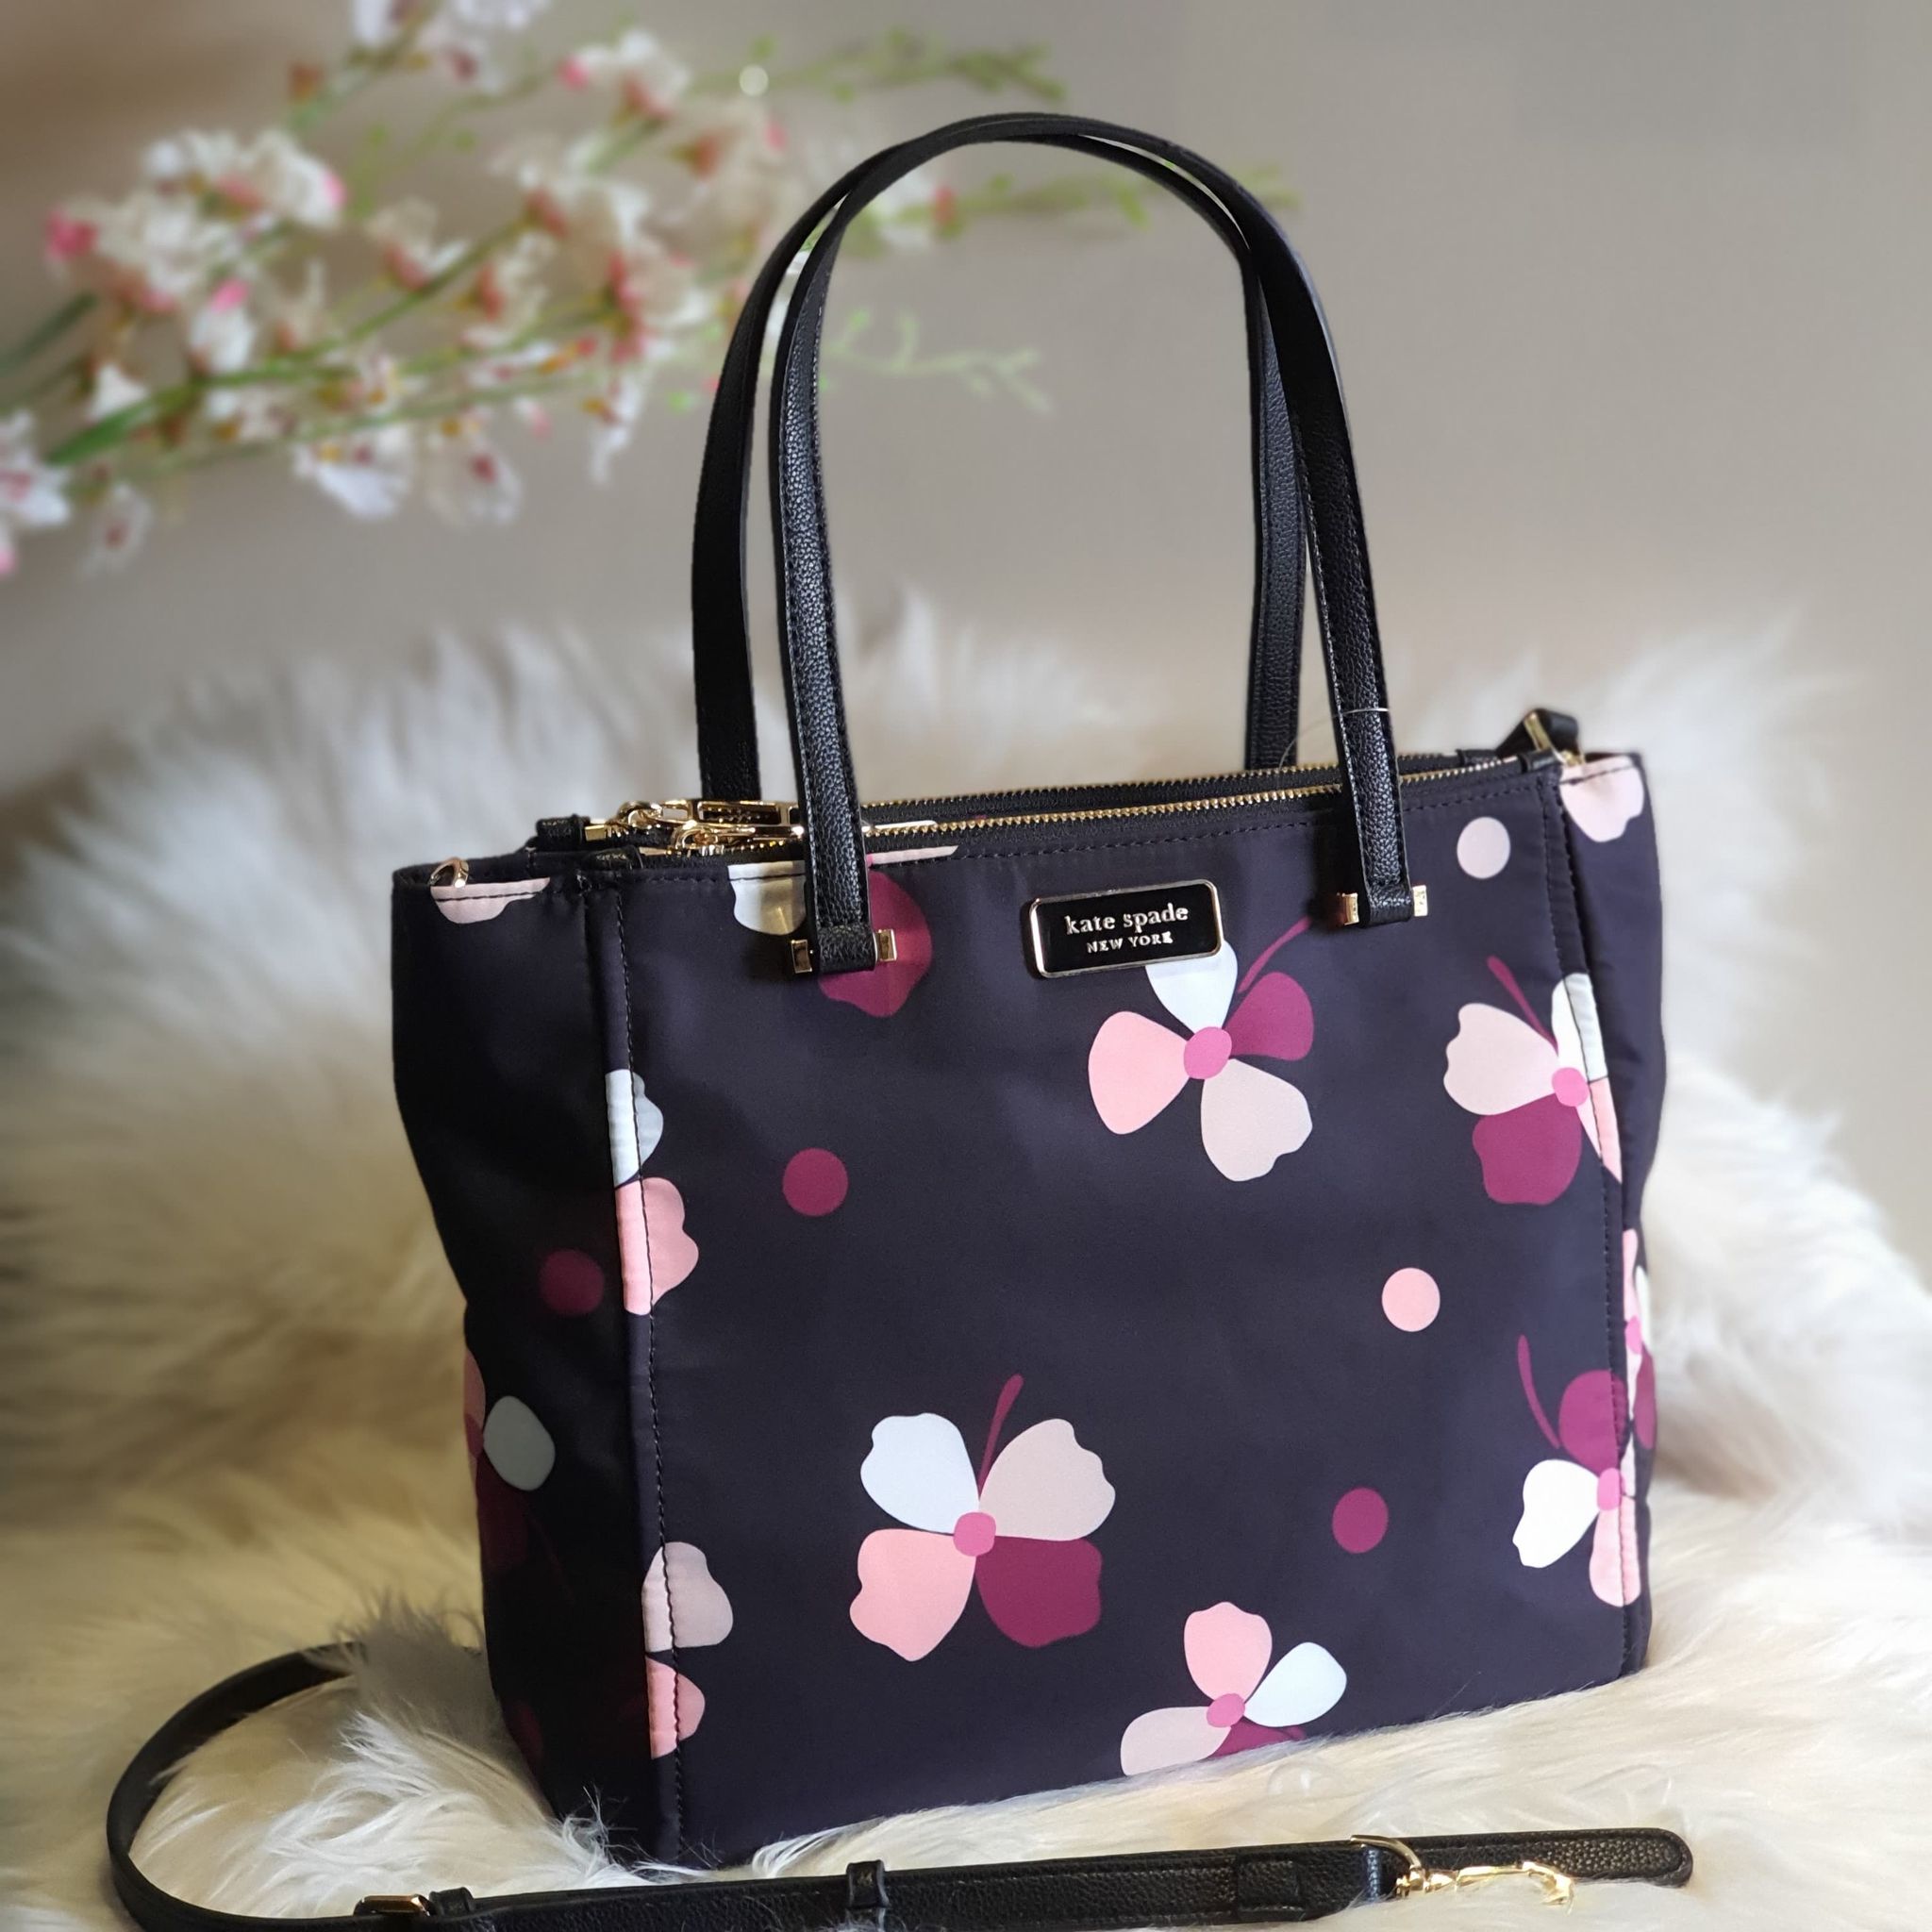 Limited Edition Kate Spade Tote Bag Classic Dawn Satchel Daisy Flower Print  Two Zip and Tab Closure Nylon - Black Medium | Lazada PH